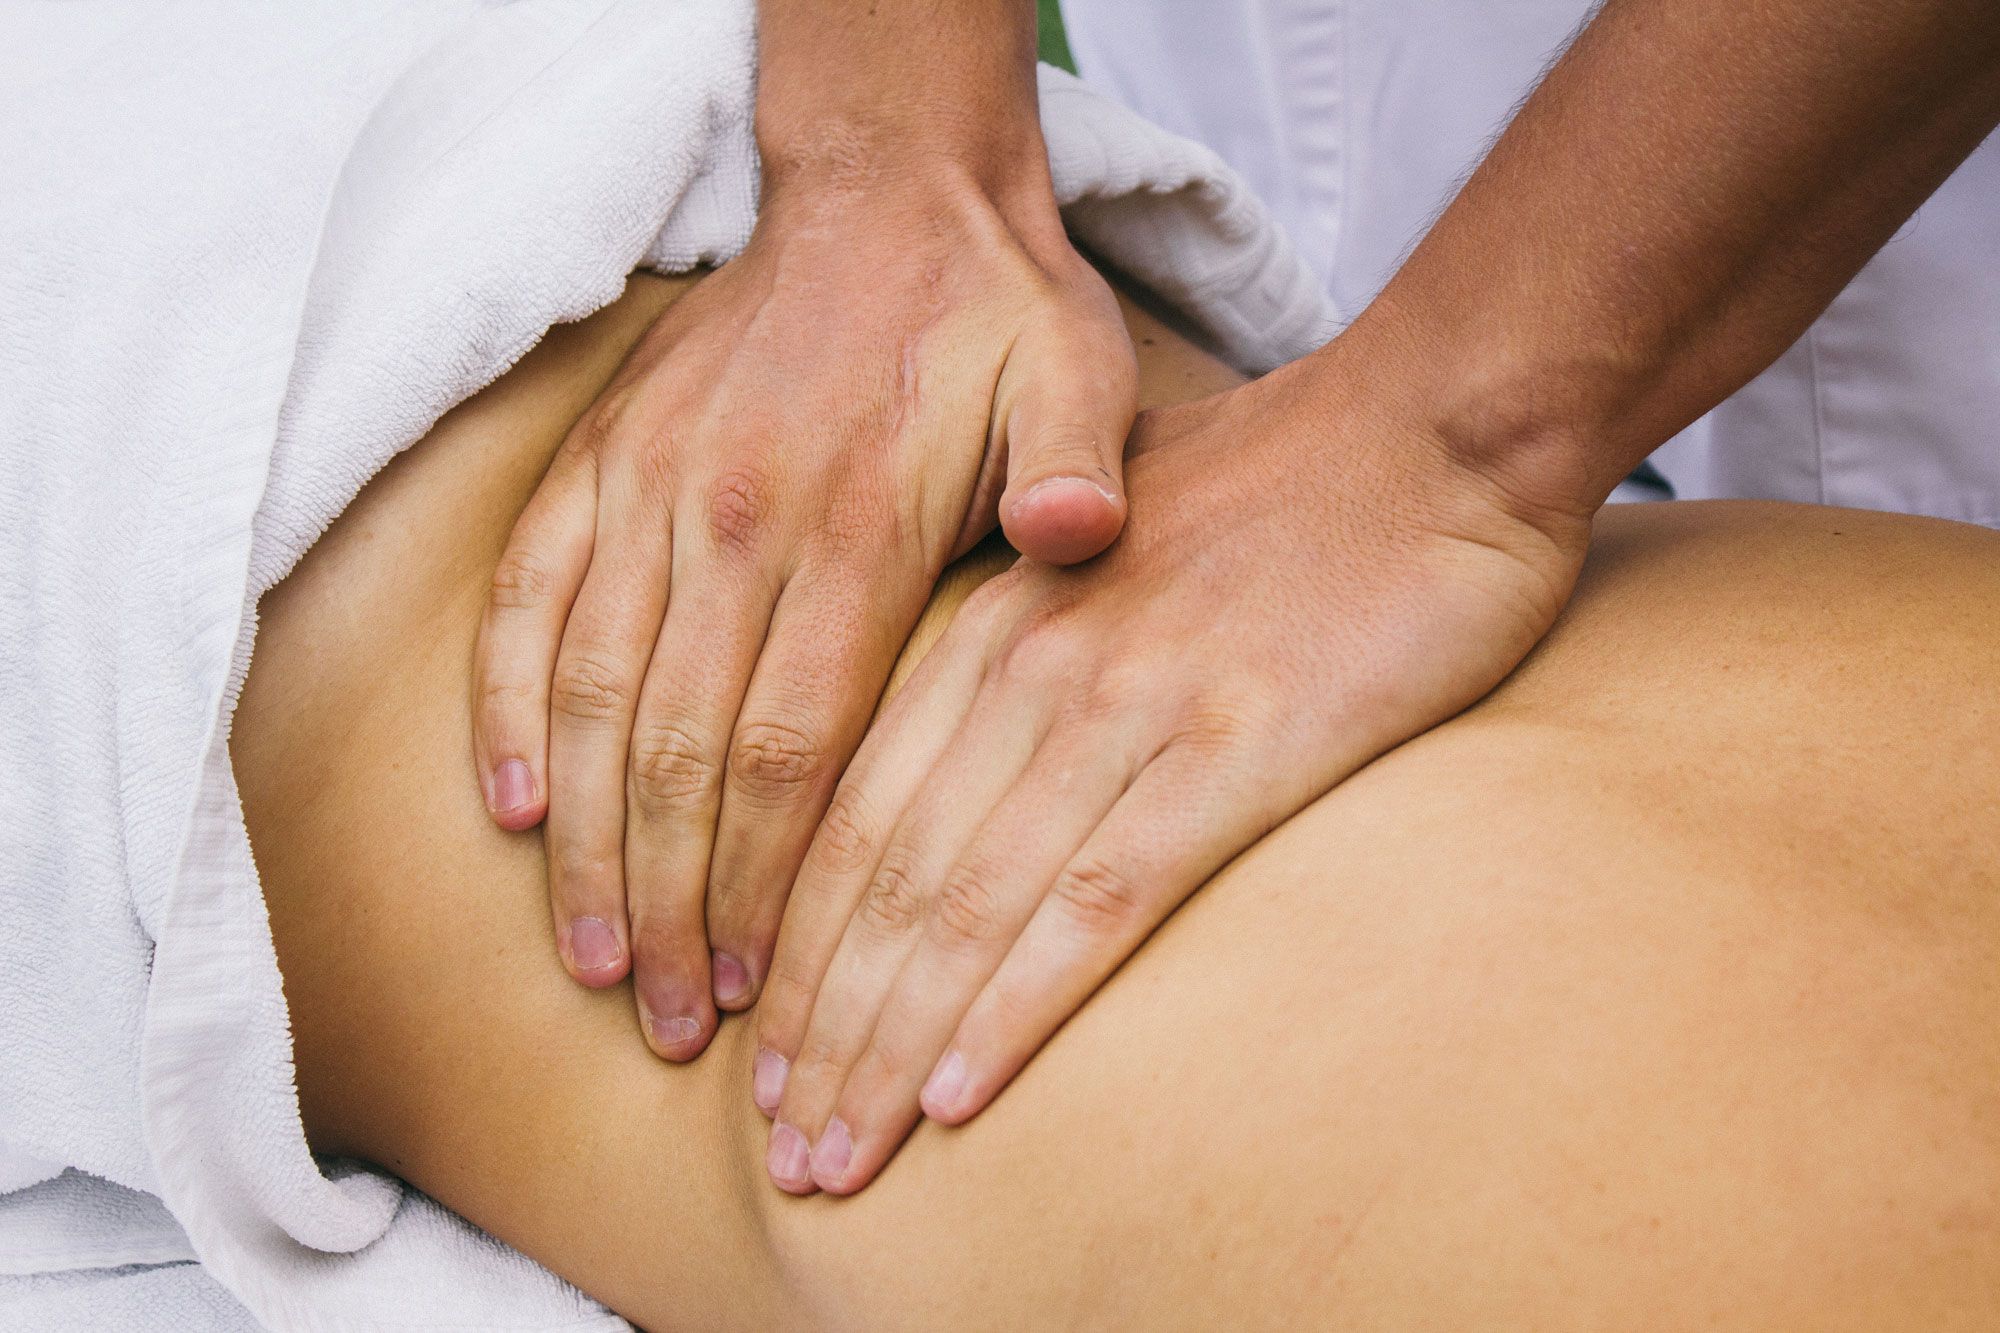 women massage happy ending hot porn